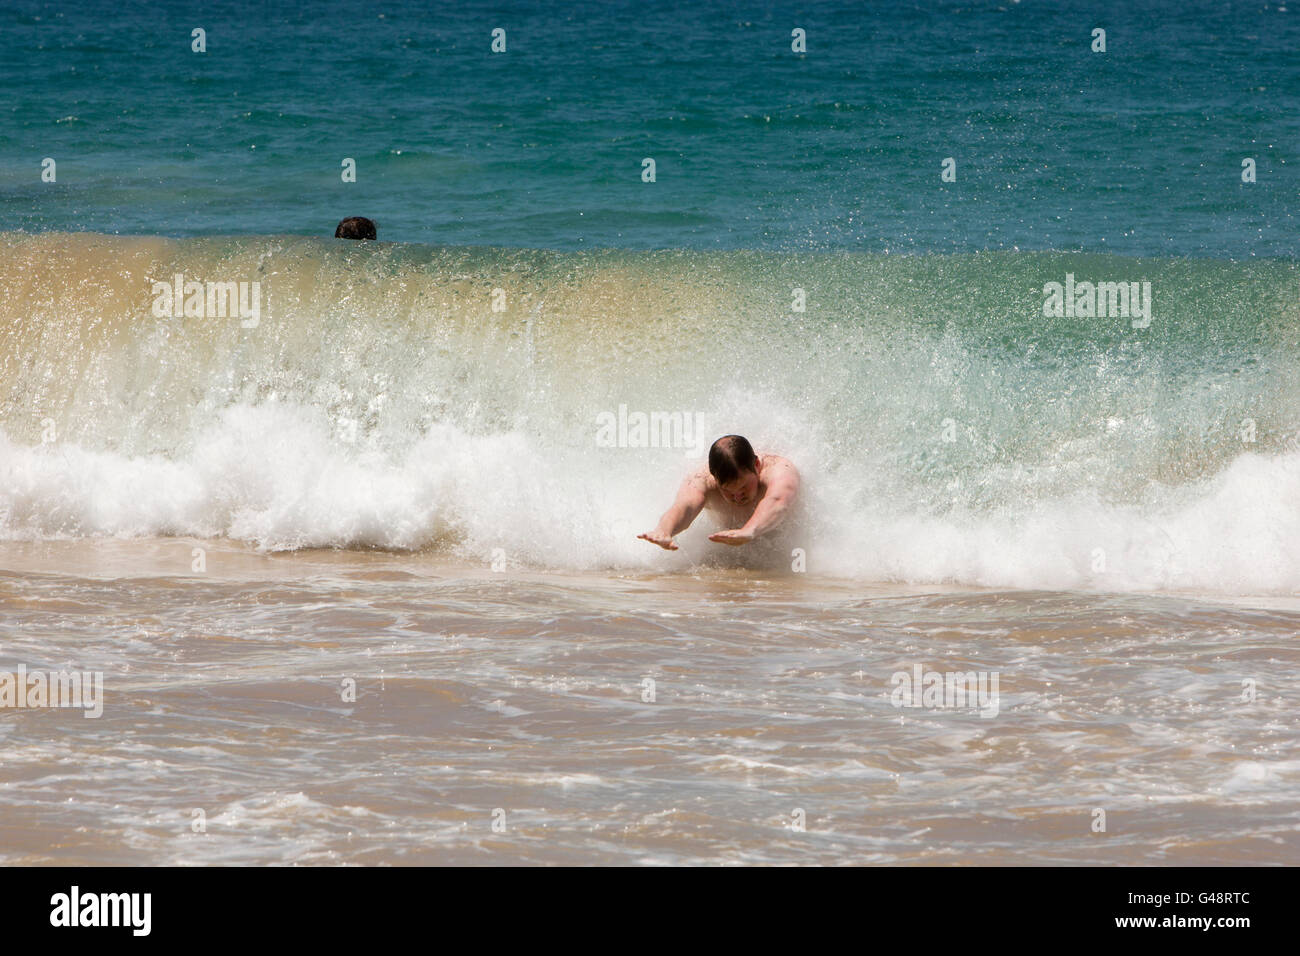 Sri Lanka, Mirissa Beach, Körper des Mannes in mächtige Welle surfen Stockfoto